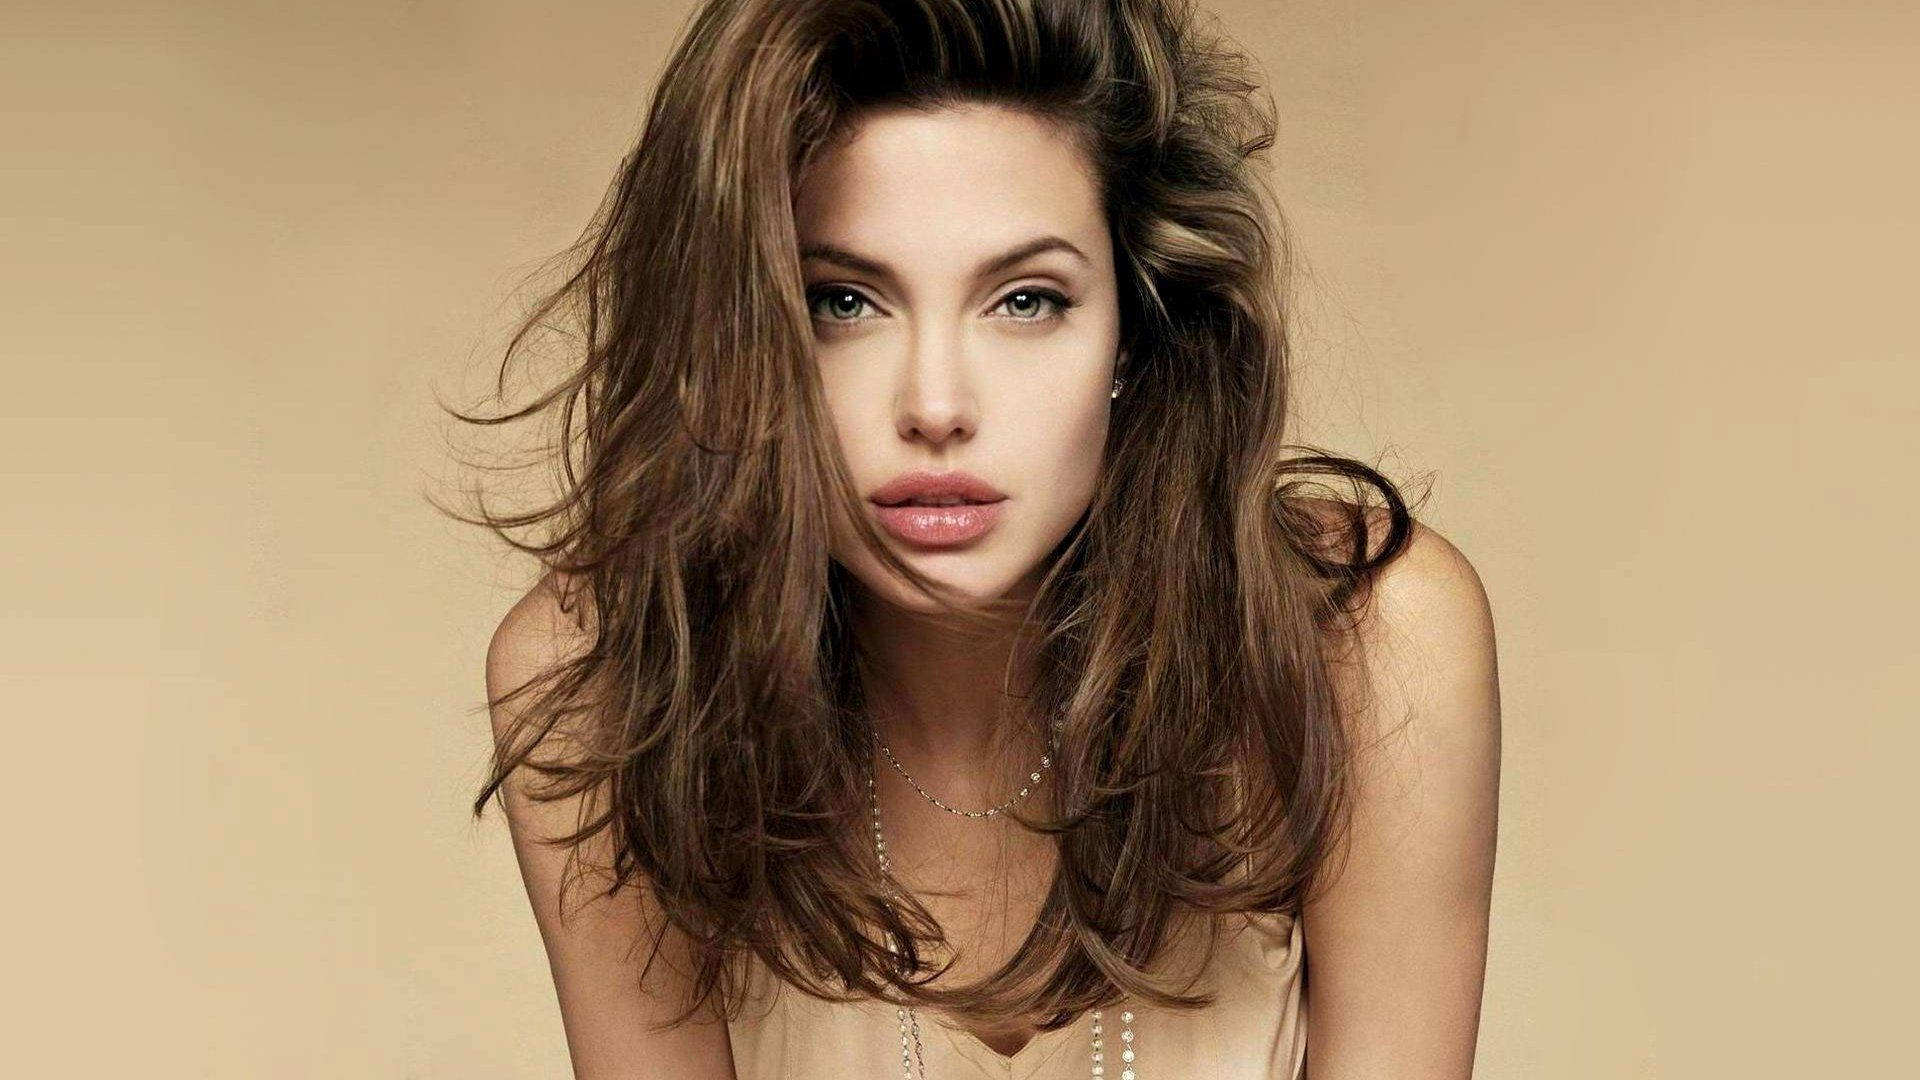 Angelina Jolie Wallpaper Images